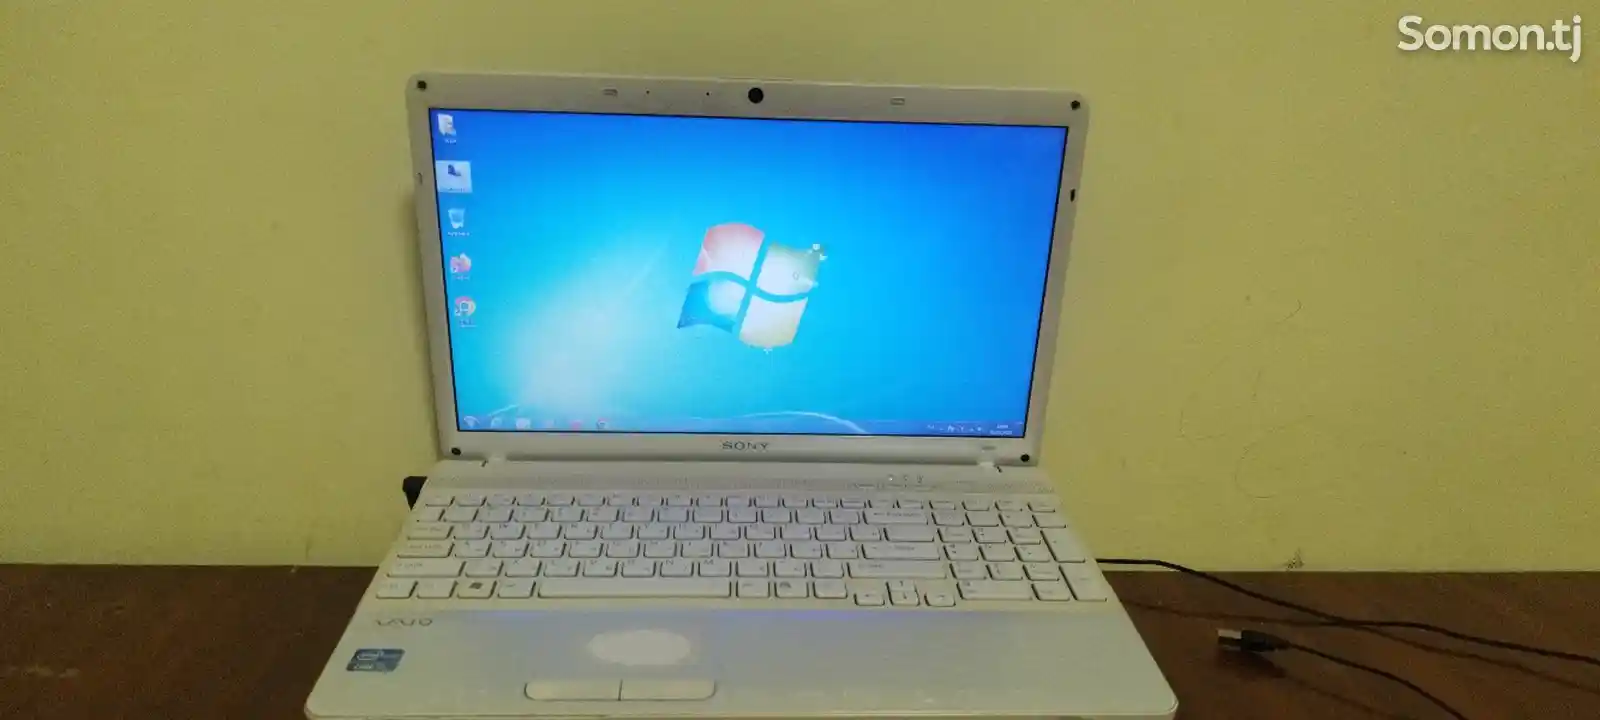 Ноутбук NoteBook SoNy-2